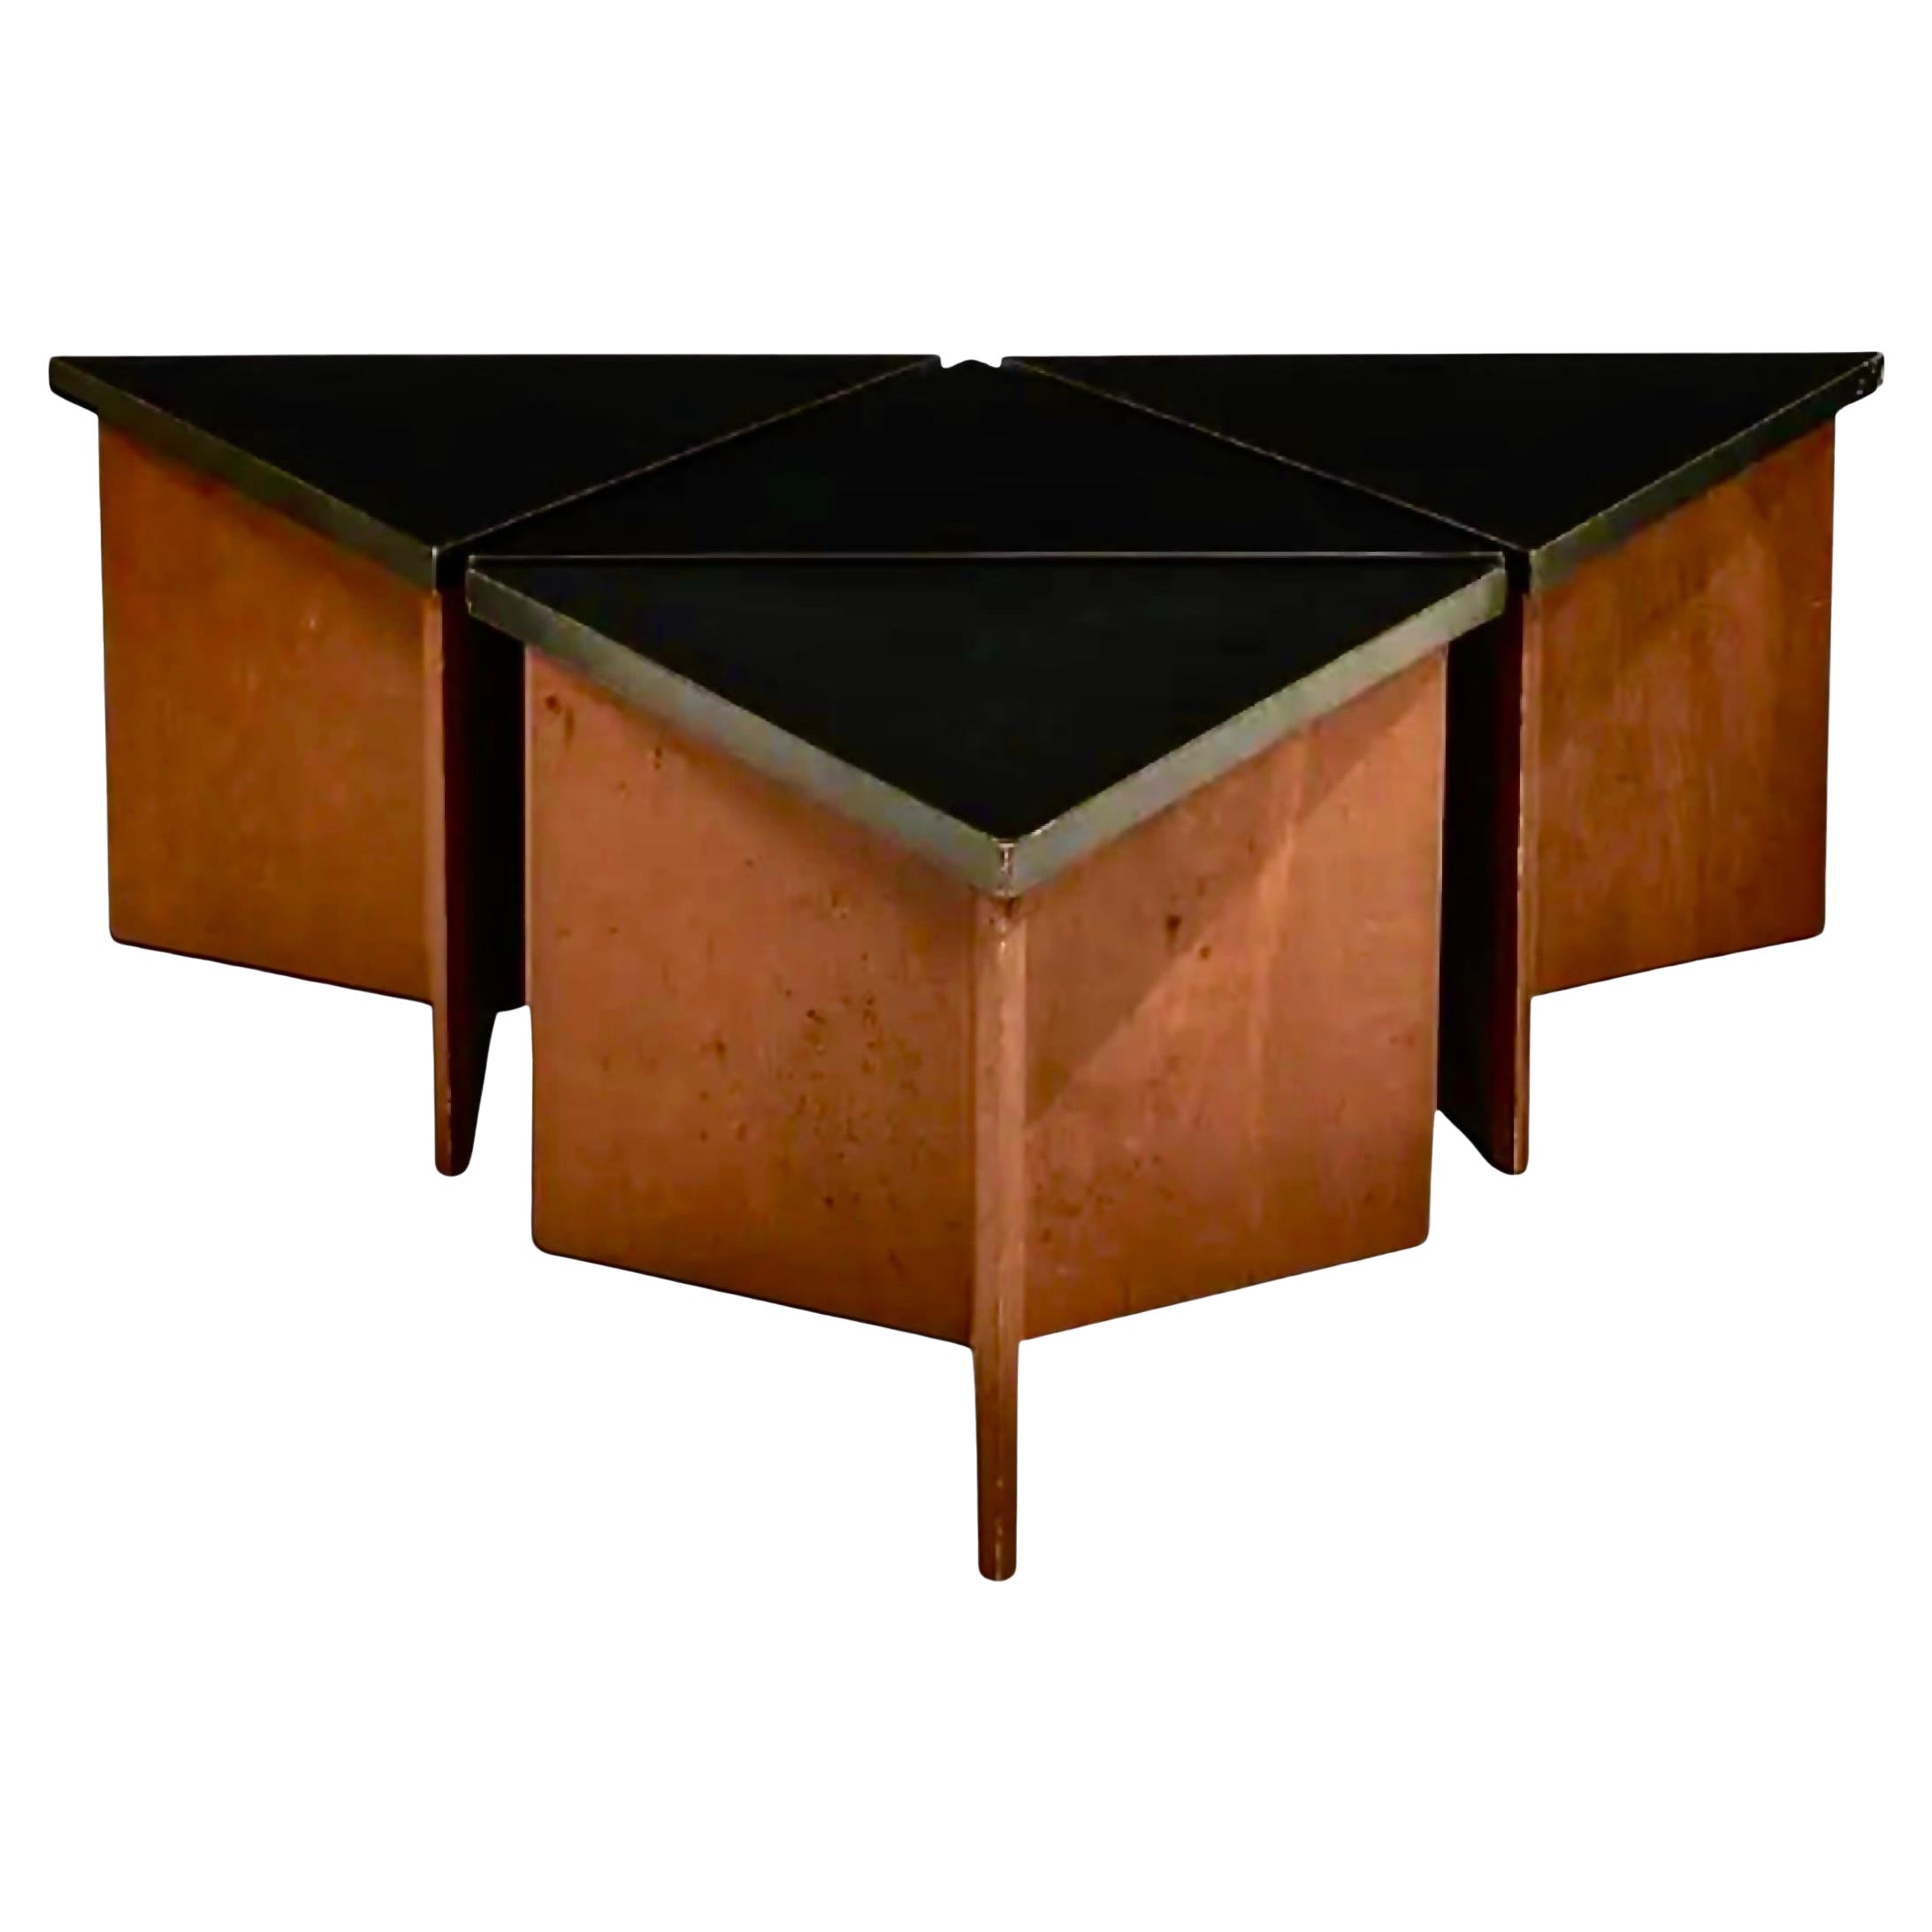 Frank Lloyd Wright, Arnold House Set of Modular Side Tables, Triangular, 1954